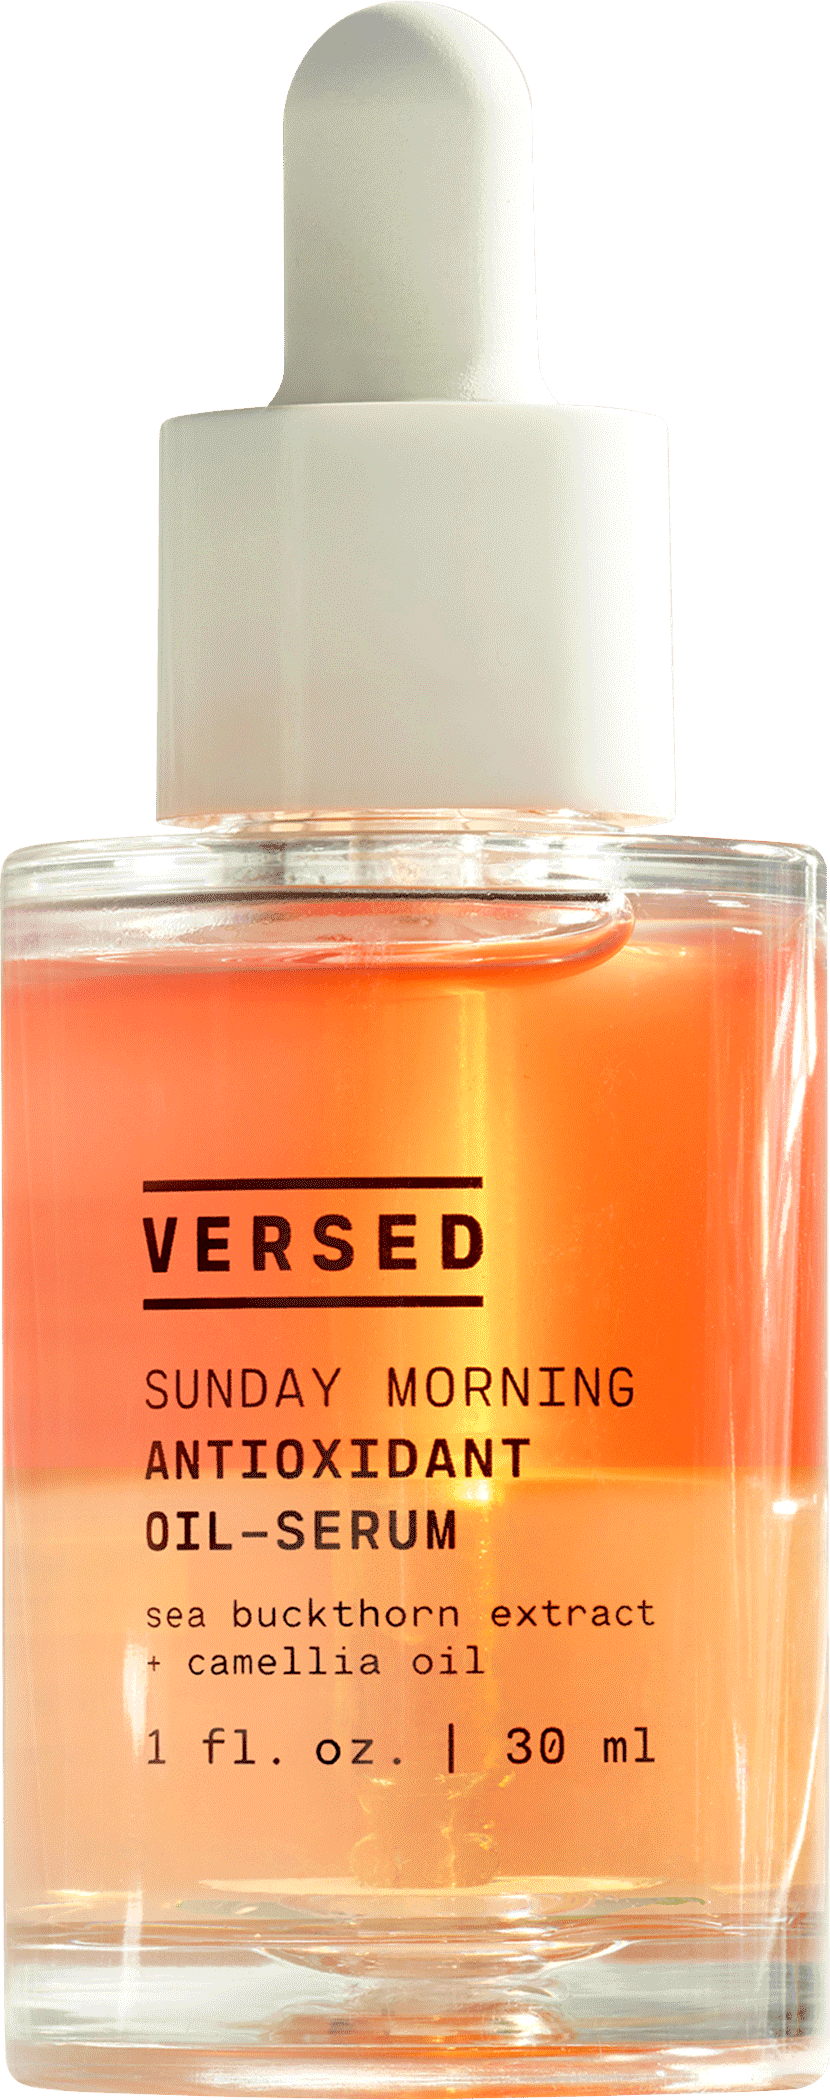 Versed Sunday Morning antioxidant oil-serum